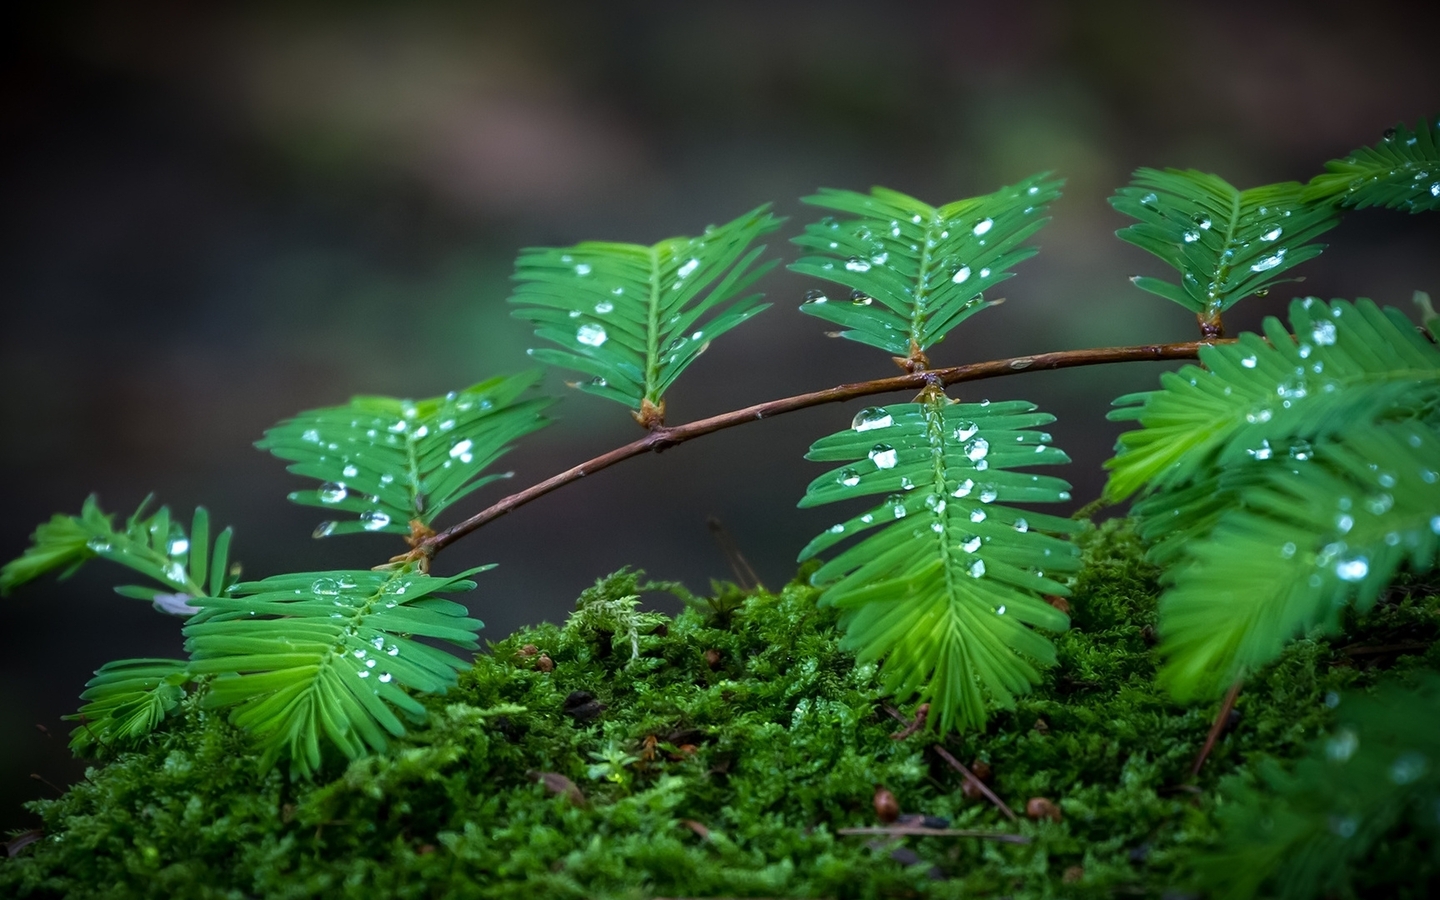 Image: Moss, herbs, leaves, branch, drops, macro